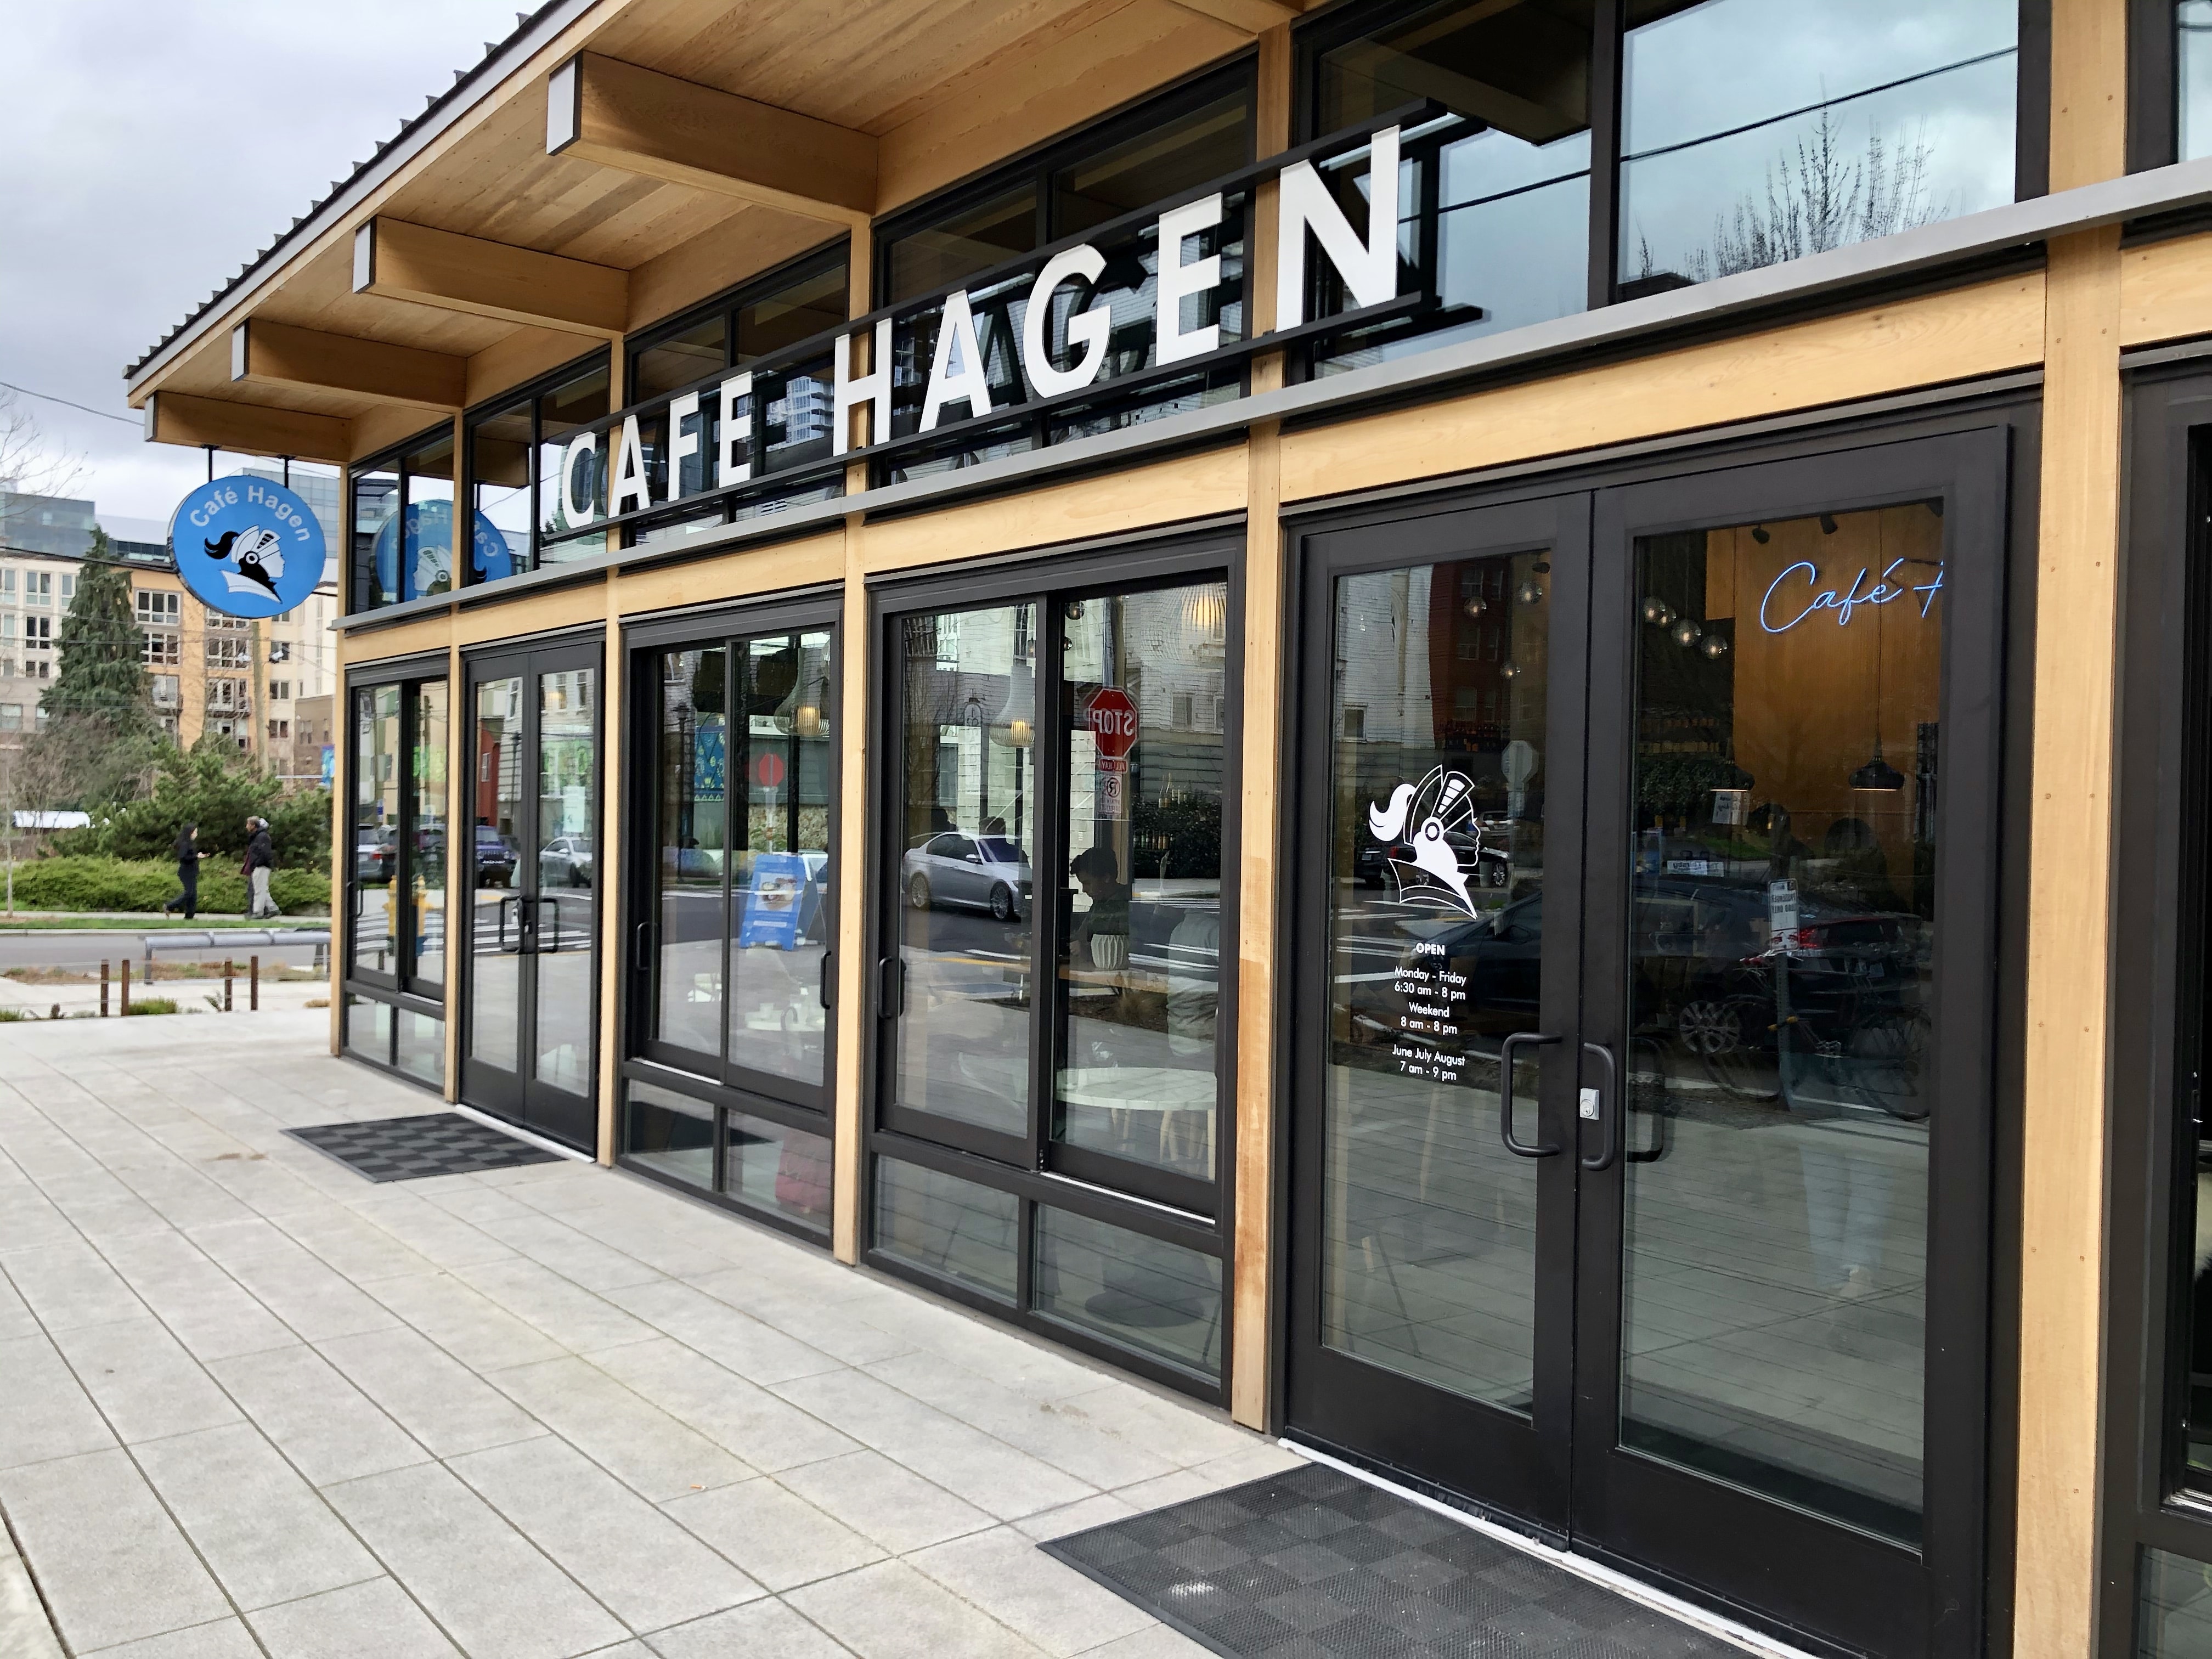 Café Hagen Seattle